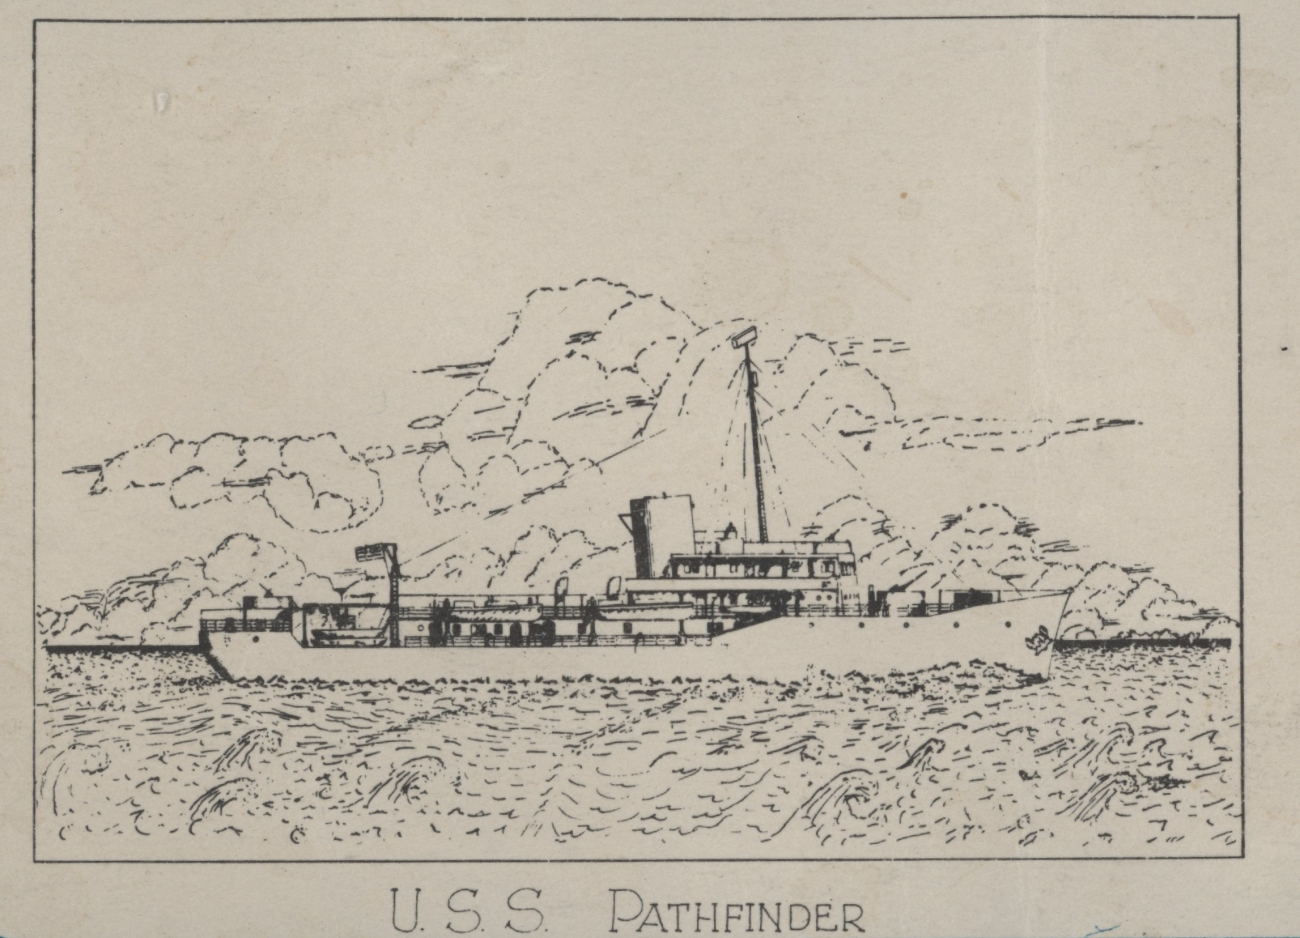 USS PATHFINDER, aka Coast and Geodetic Survey Ship PATHFINDER, offGuadalcanal